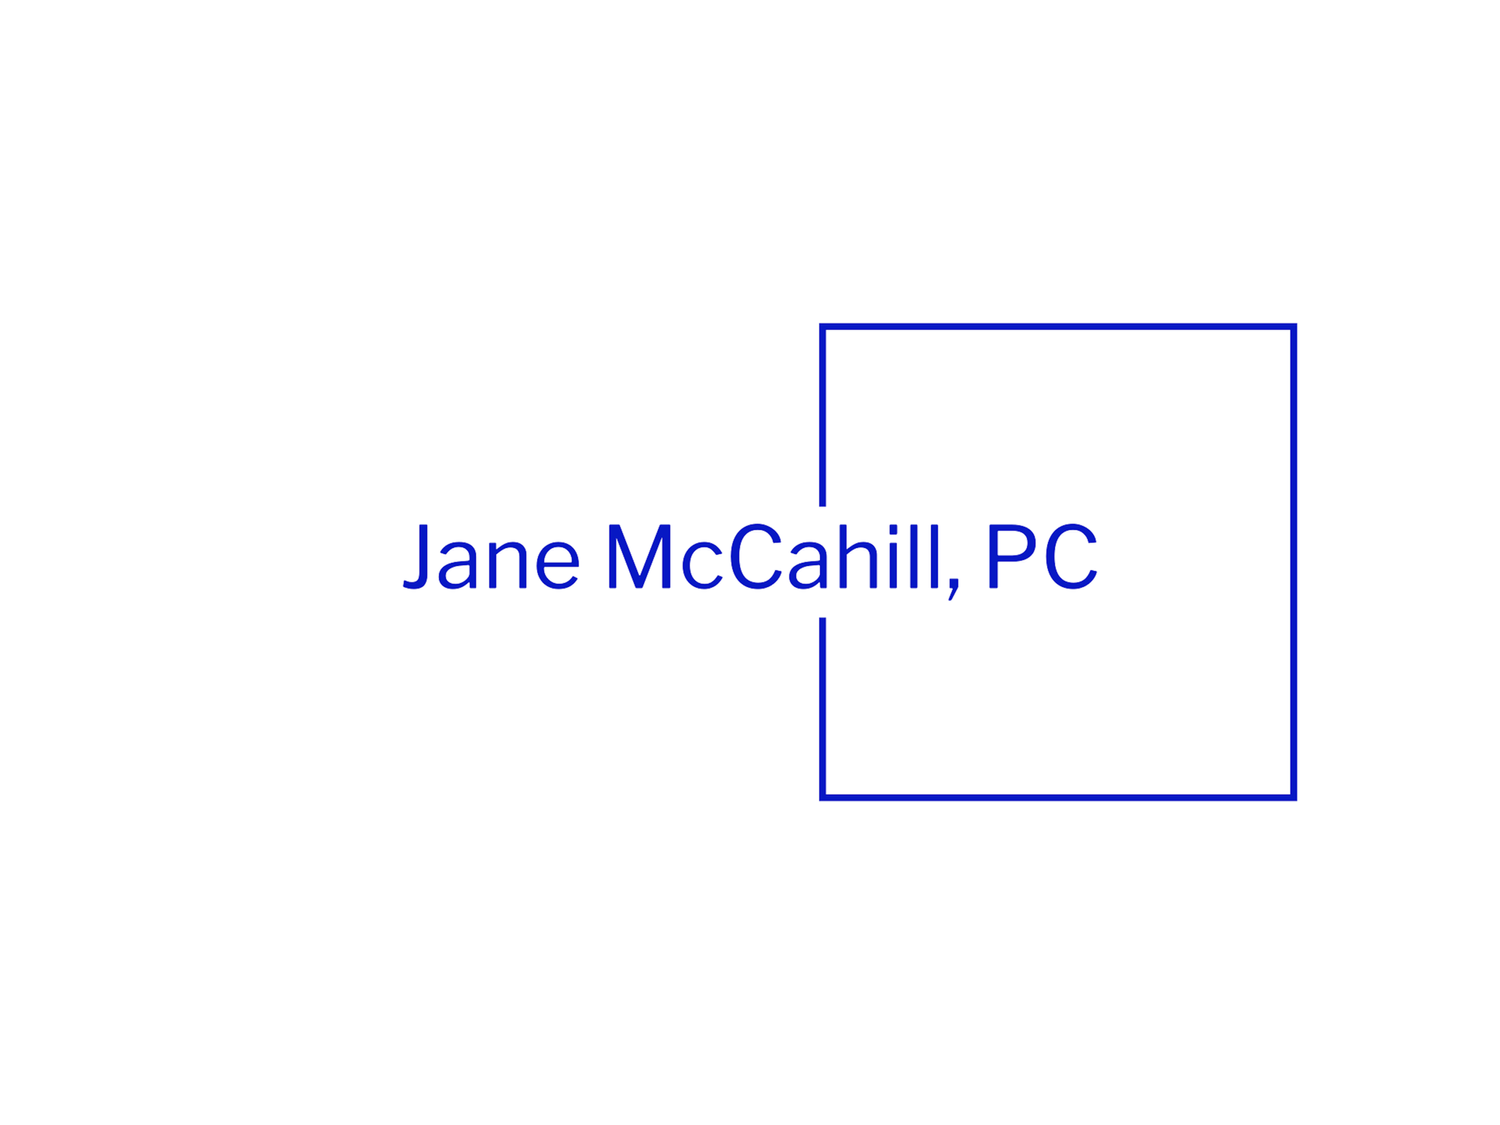 Jane McCahill, PC